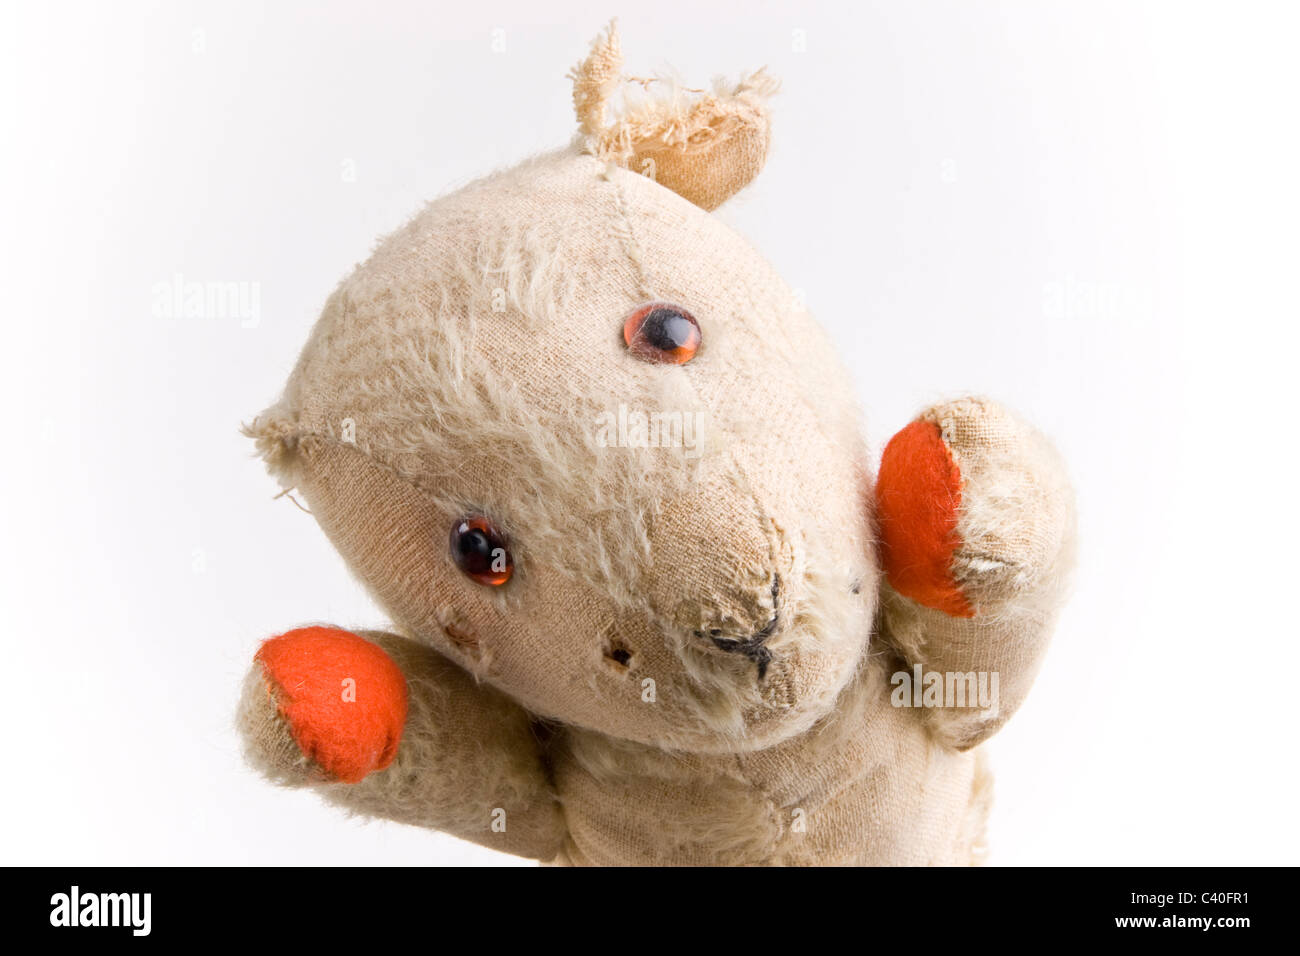 Worn old teddy bear Stock Photo - Alamy